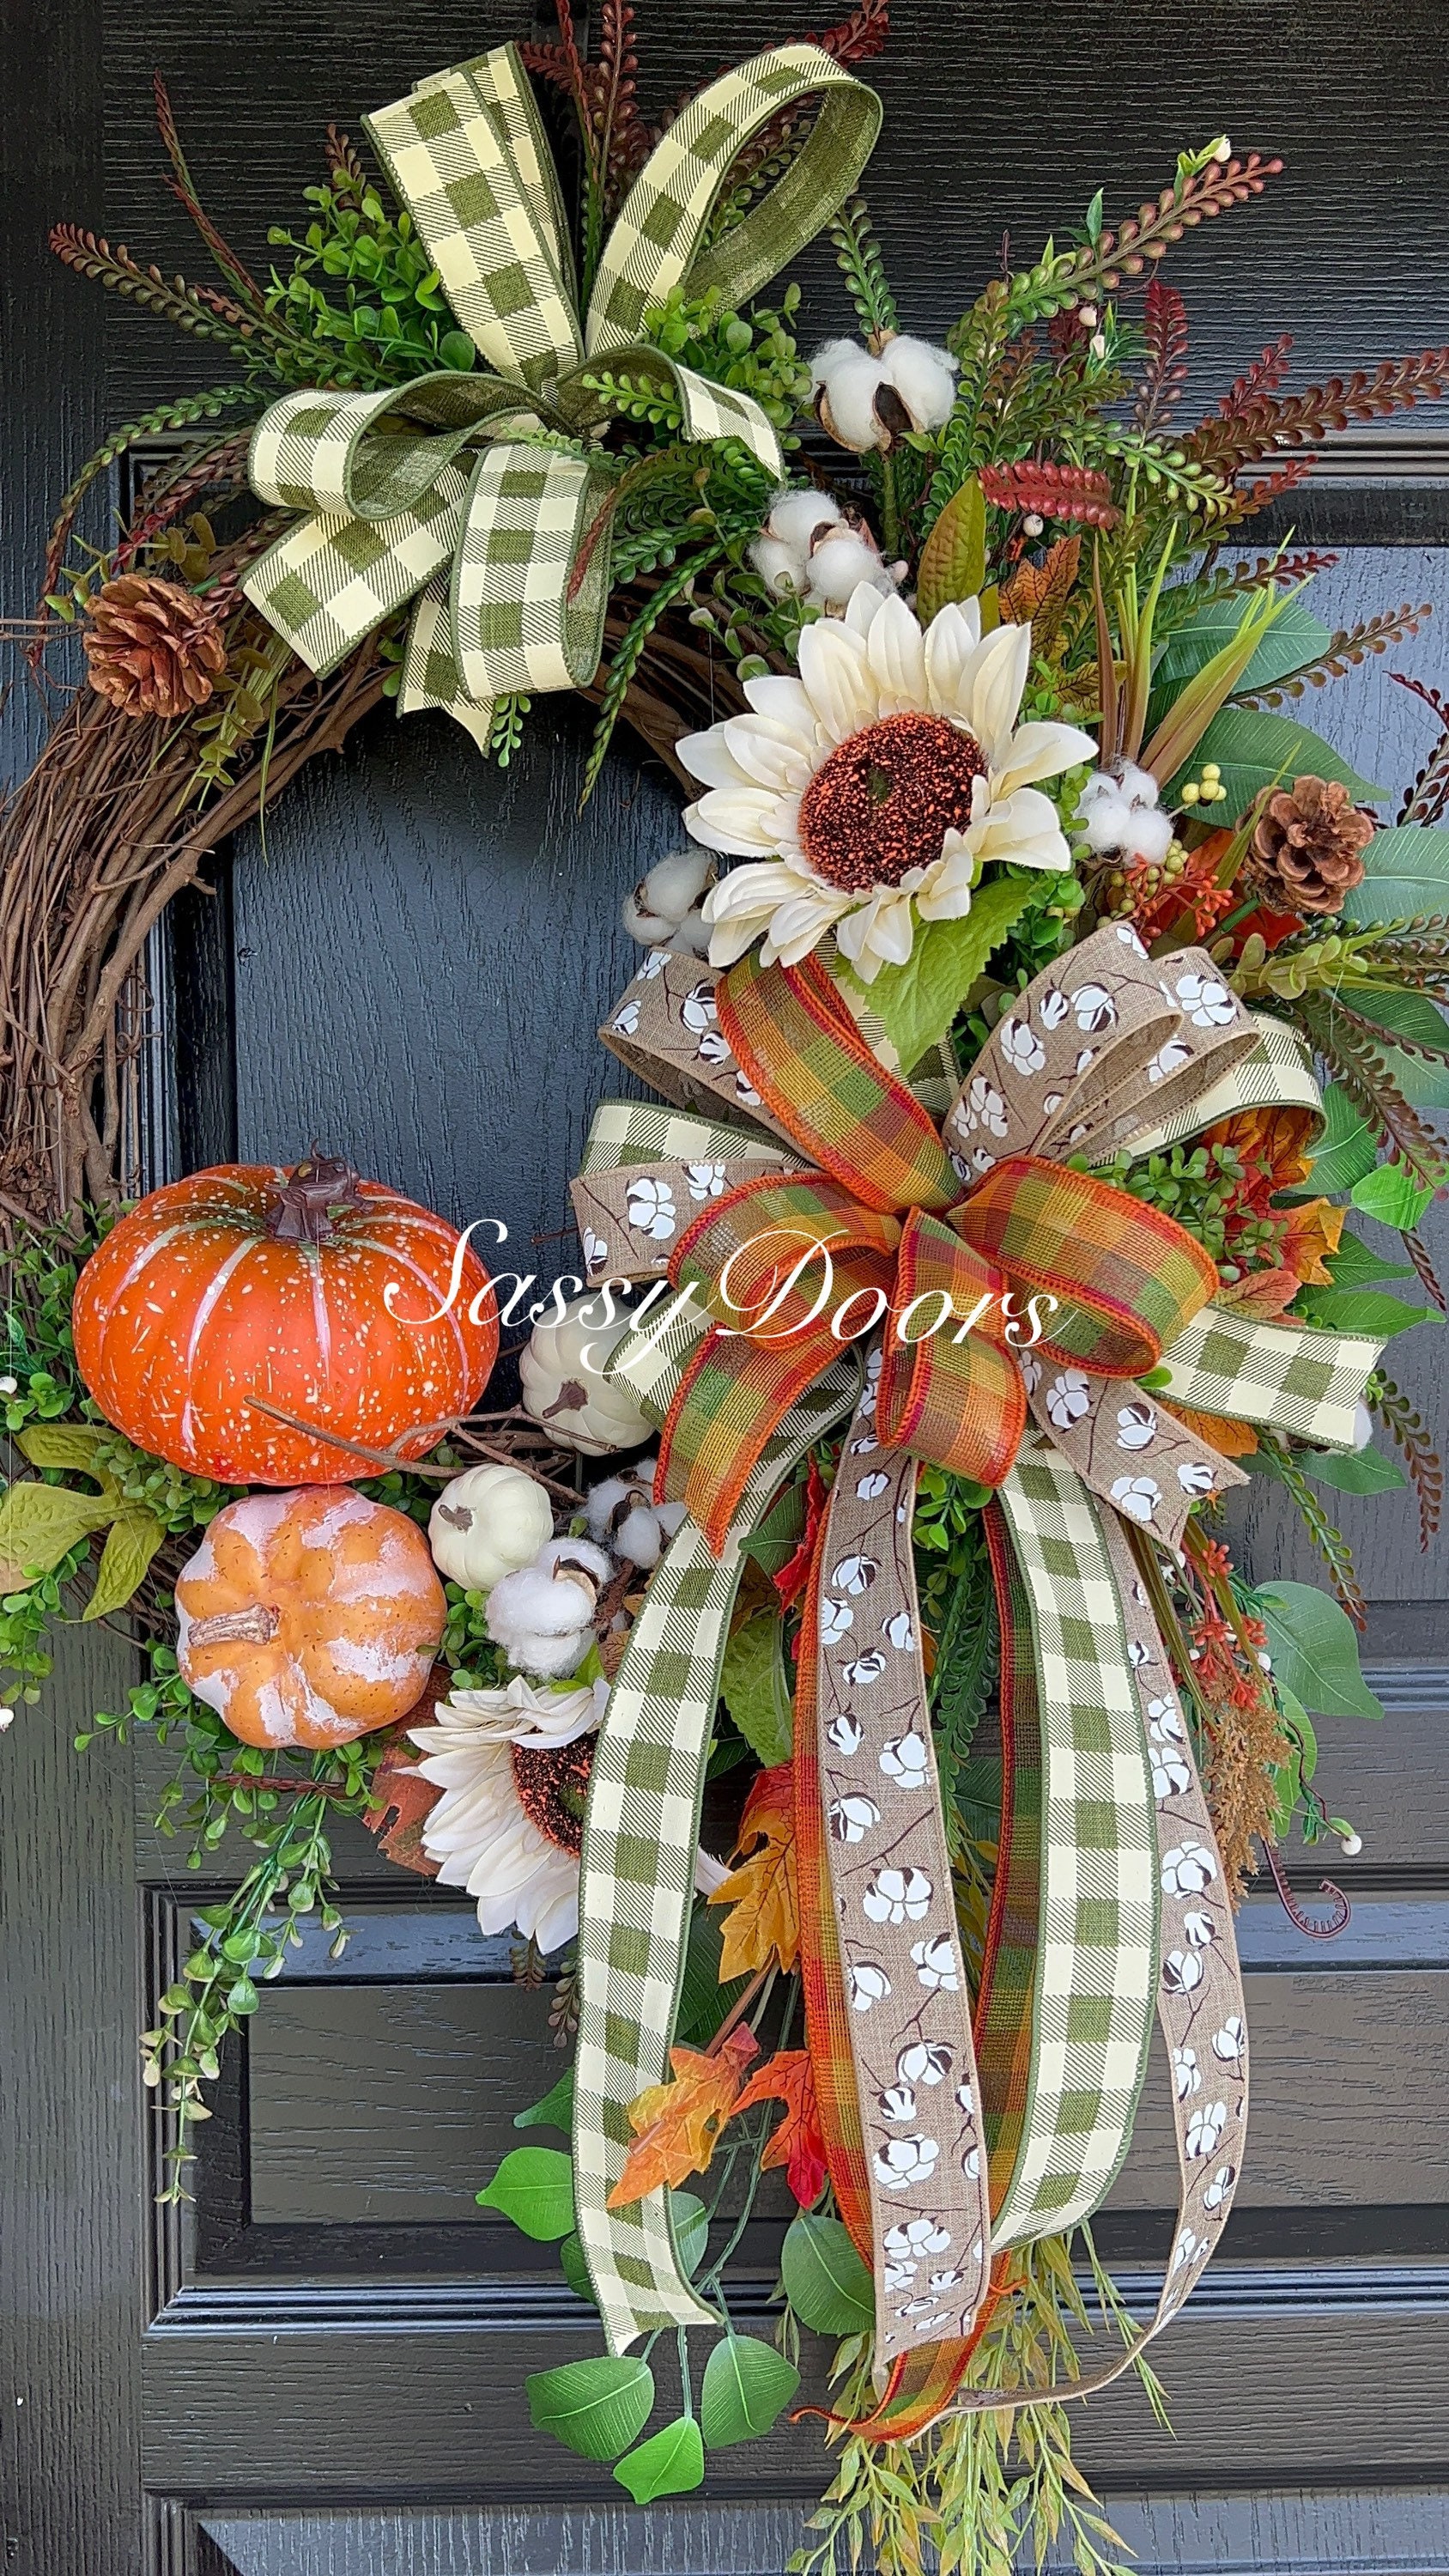 Happy Fall Wreath, Fall Sunflower Wreath, Fall Wreath, Sunflower Front ...